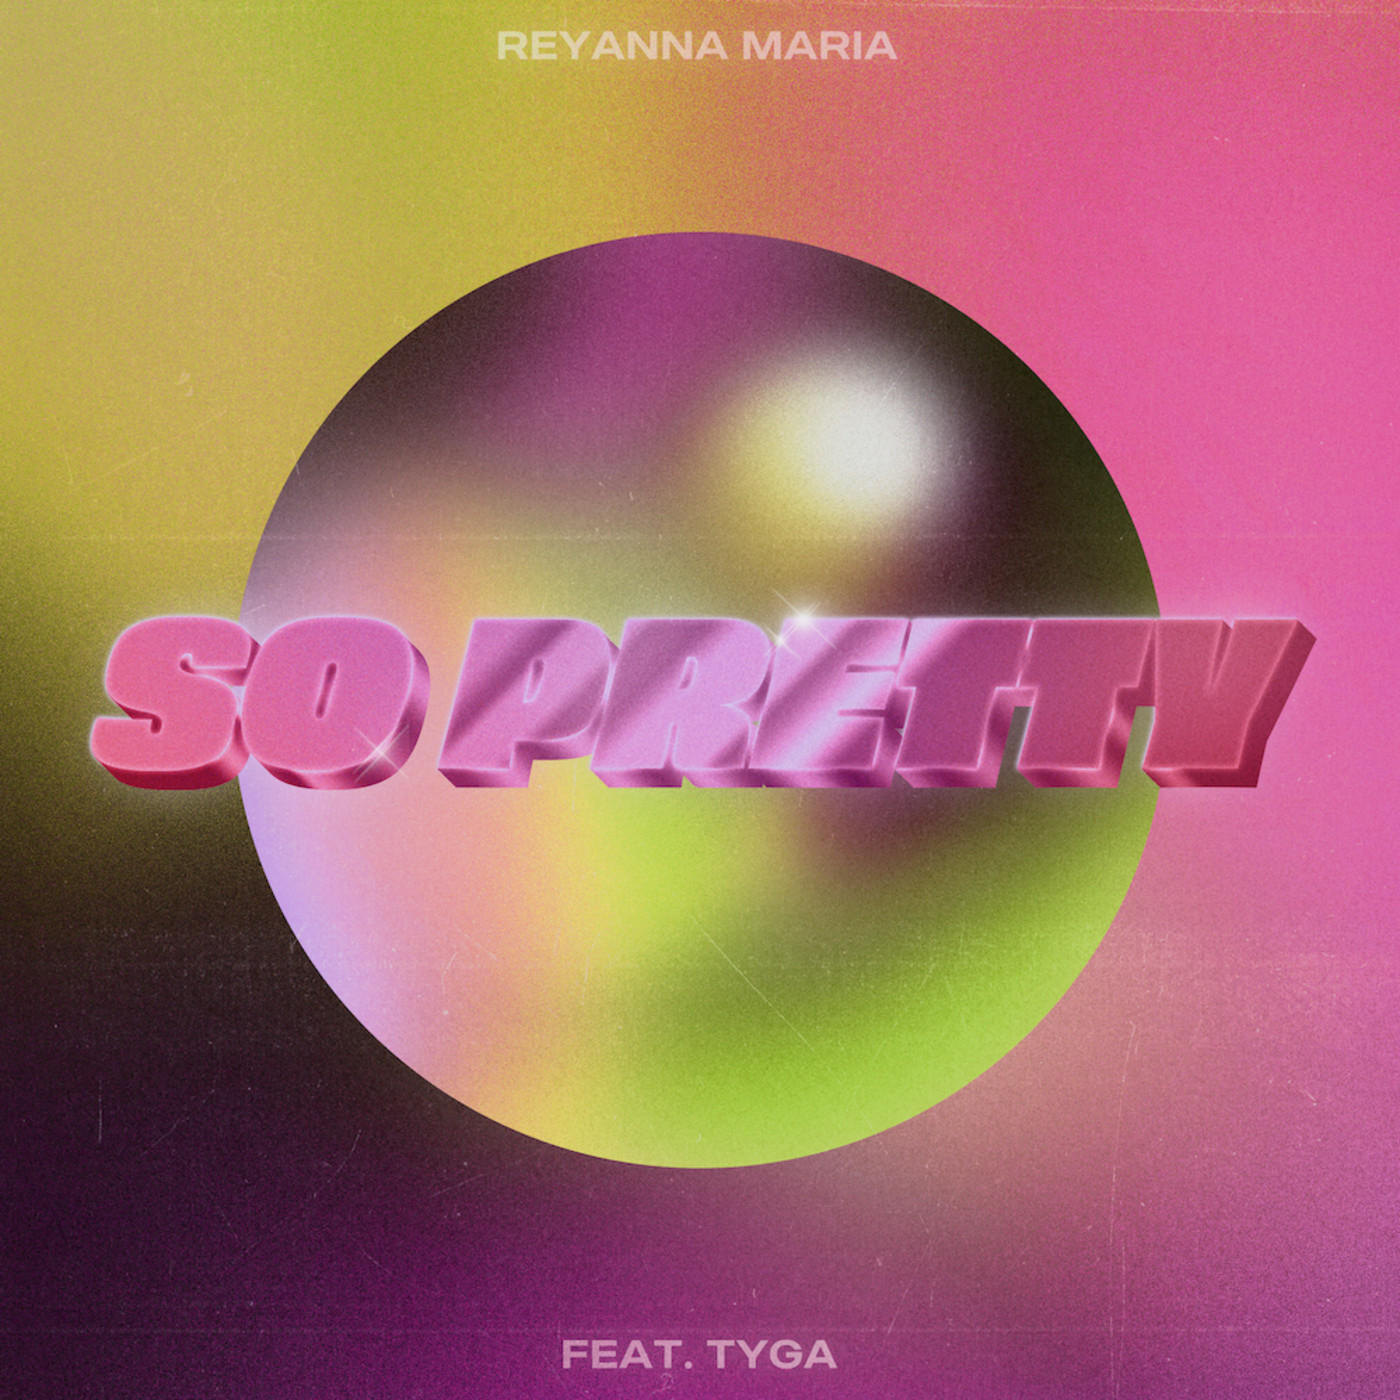 Listen to Reyanna Maria’s Song “So Pretty” (Remix) f/ Tyga